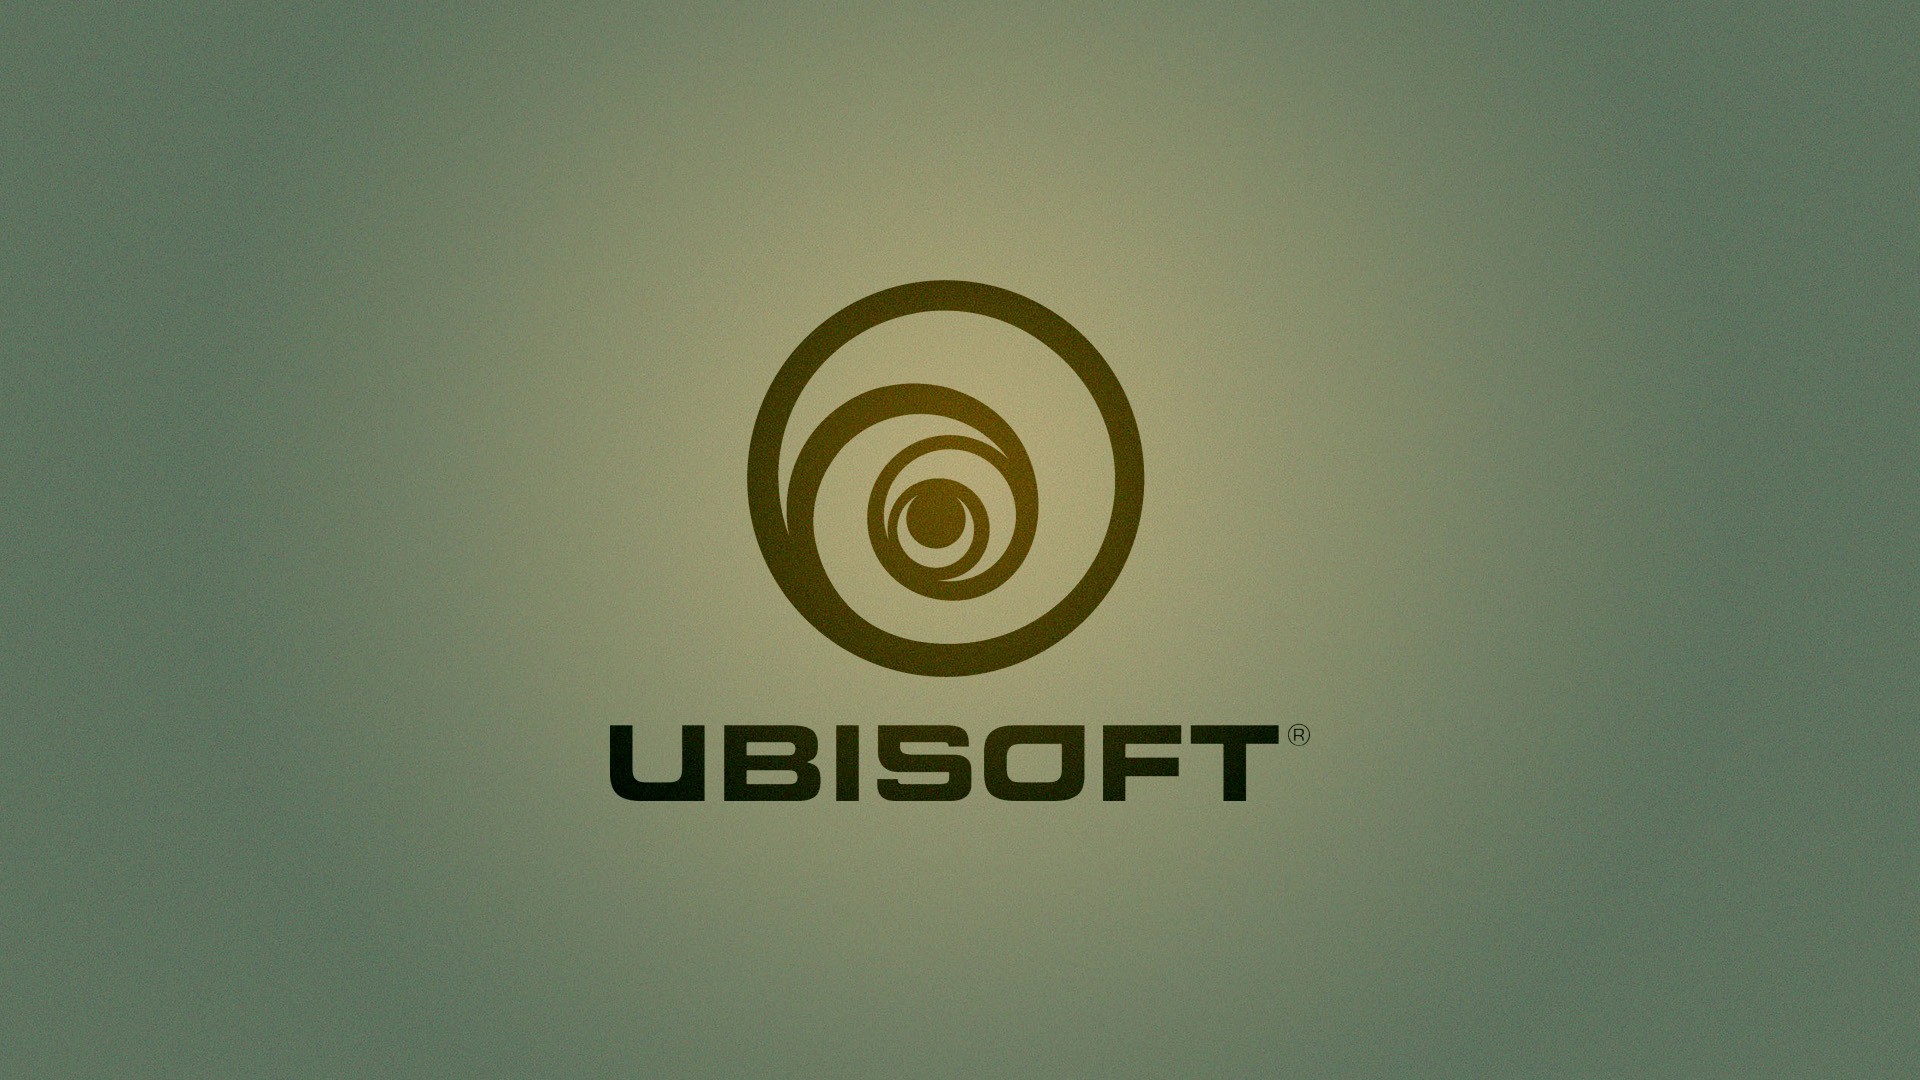 General 1920x1080 Ubisoft PC gaming minimalism logo simple background video games